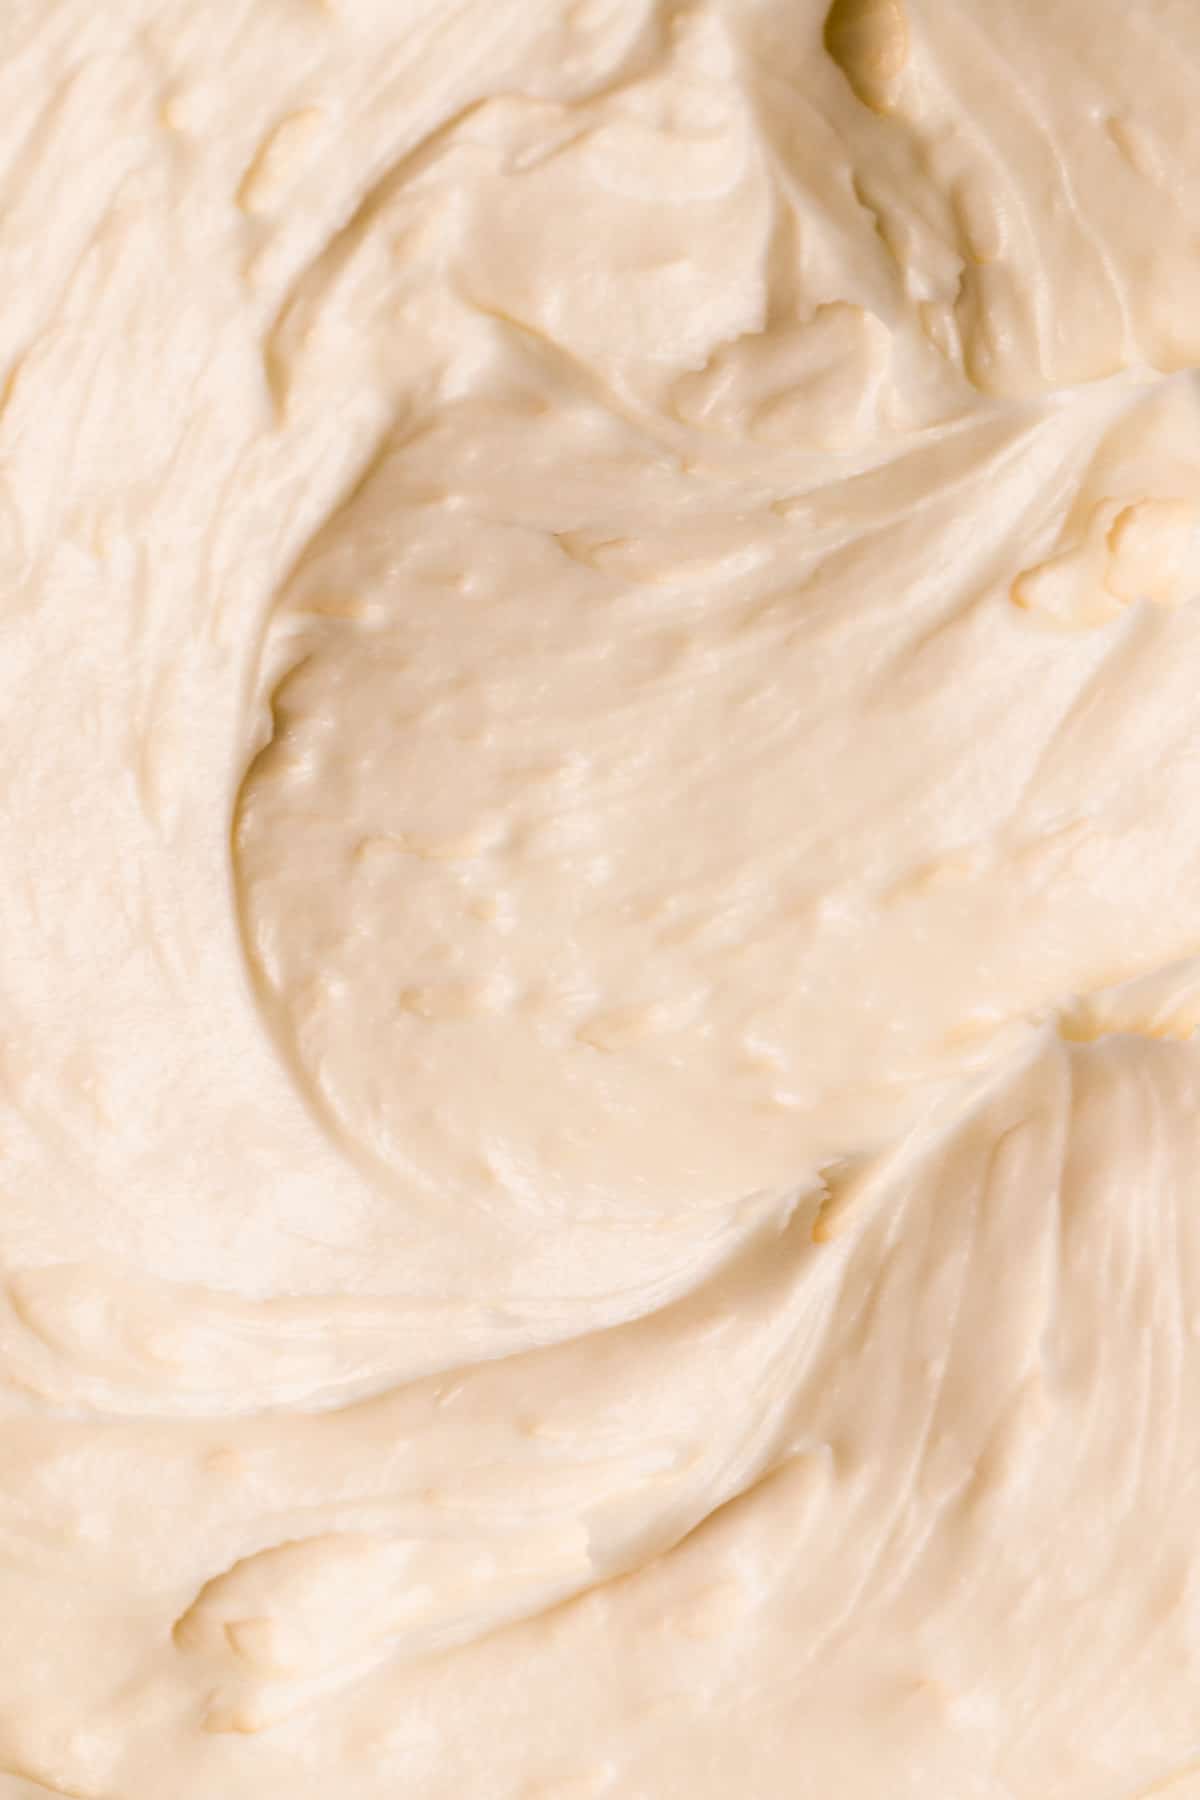 A close up shot of faux Swiss meringue buttercream.